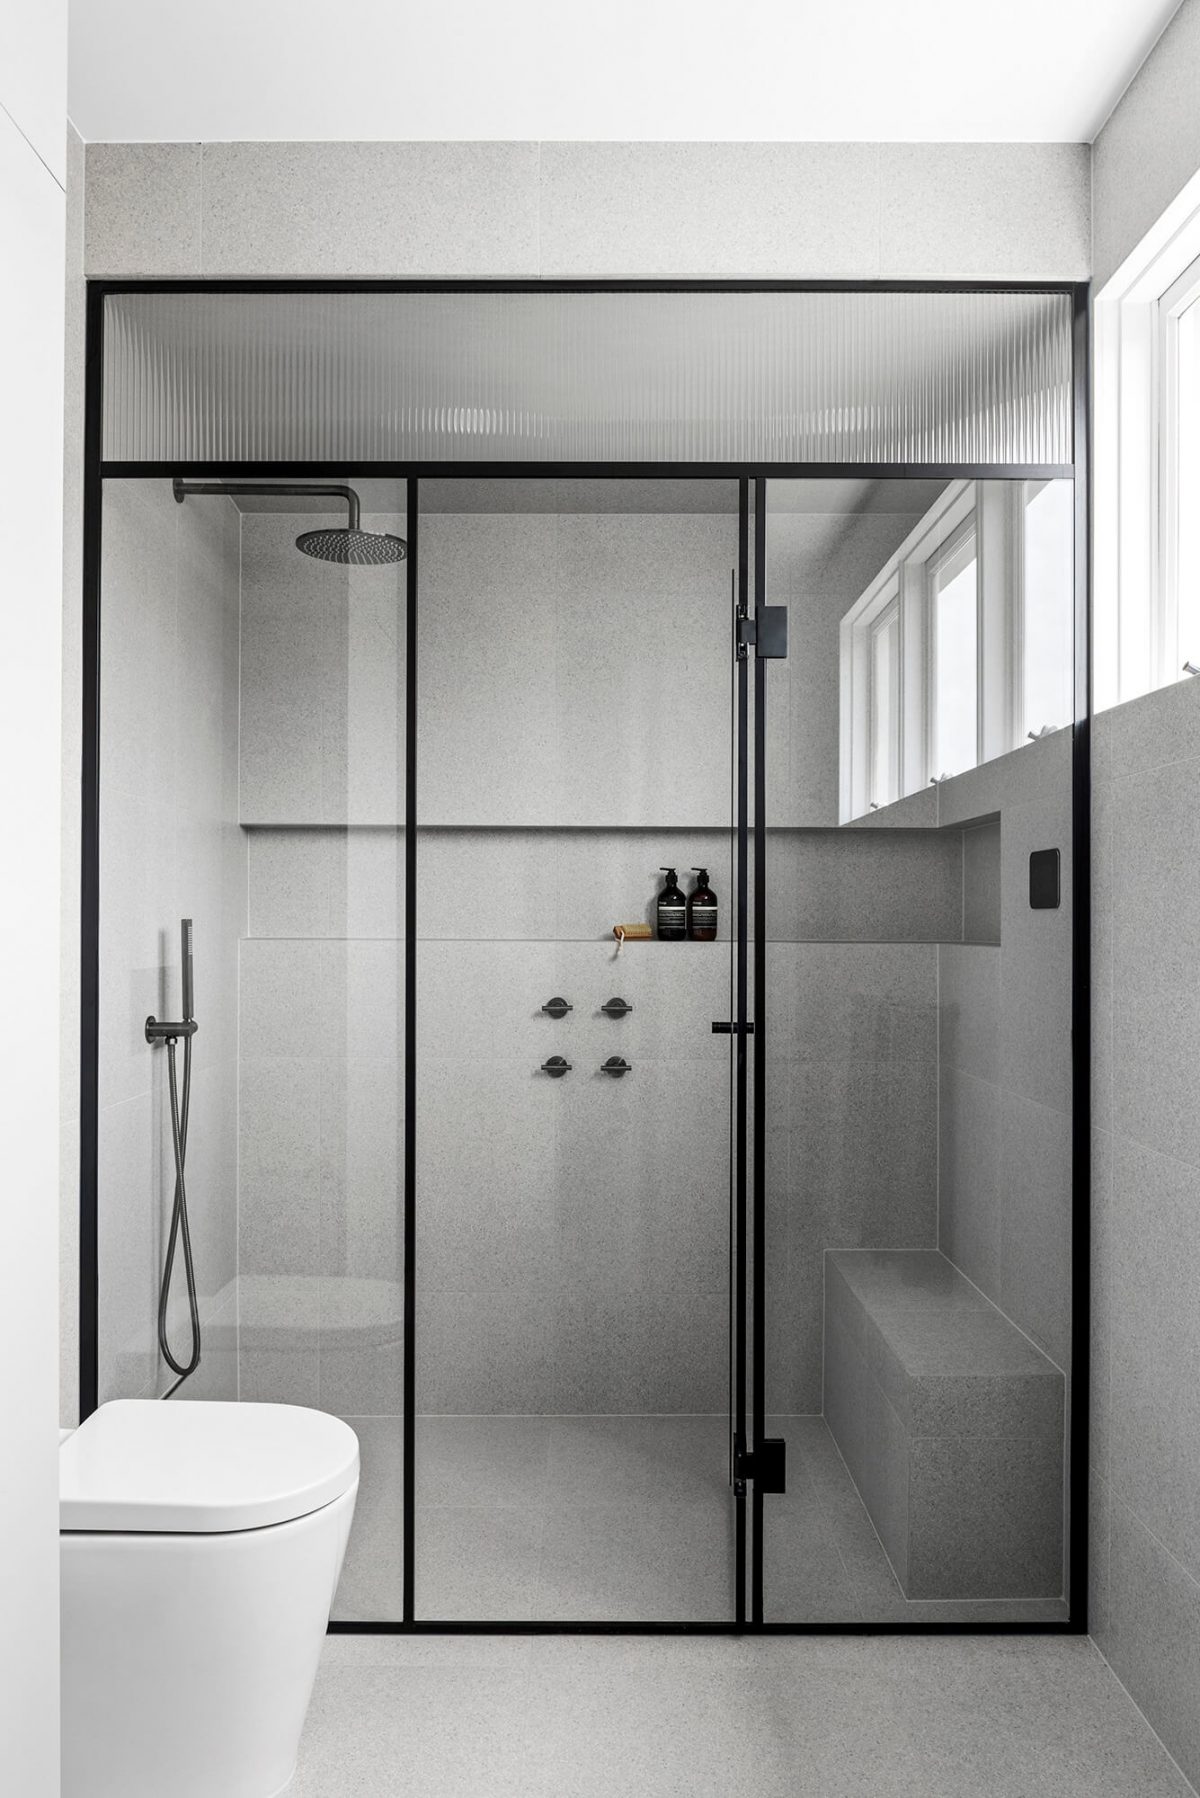 steam shower, brushed gunmetal tapware, wall-to-wall niche, shower seat, grey terrazzo til